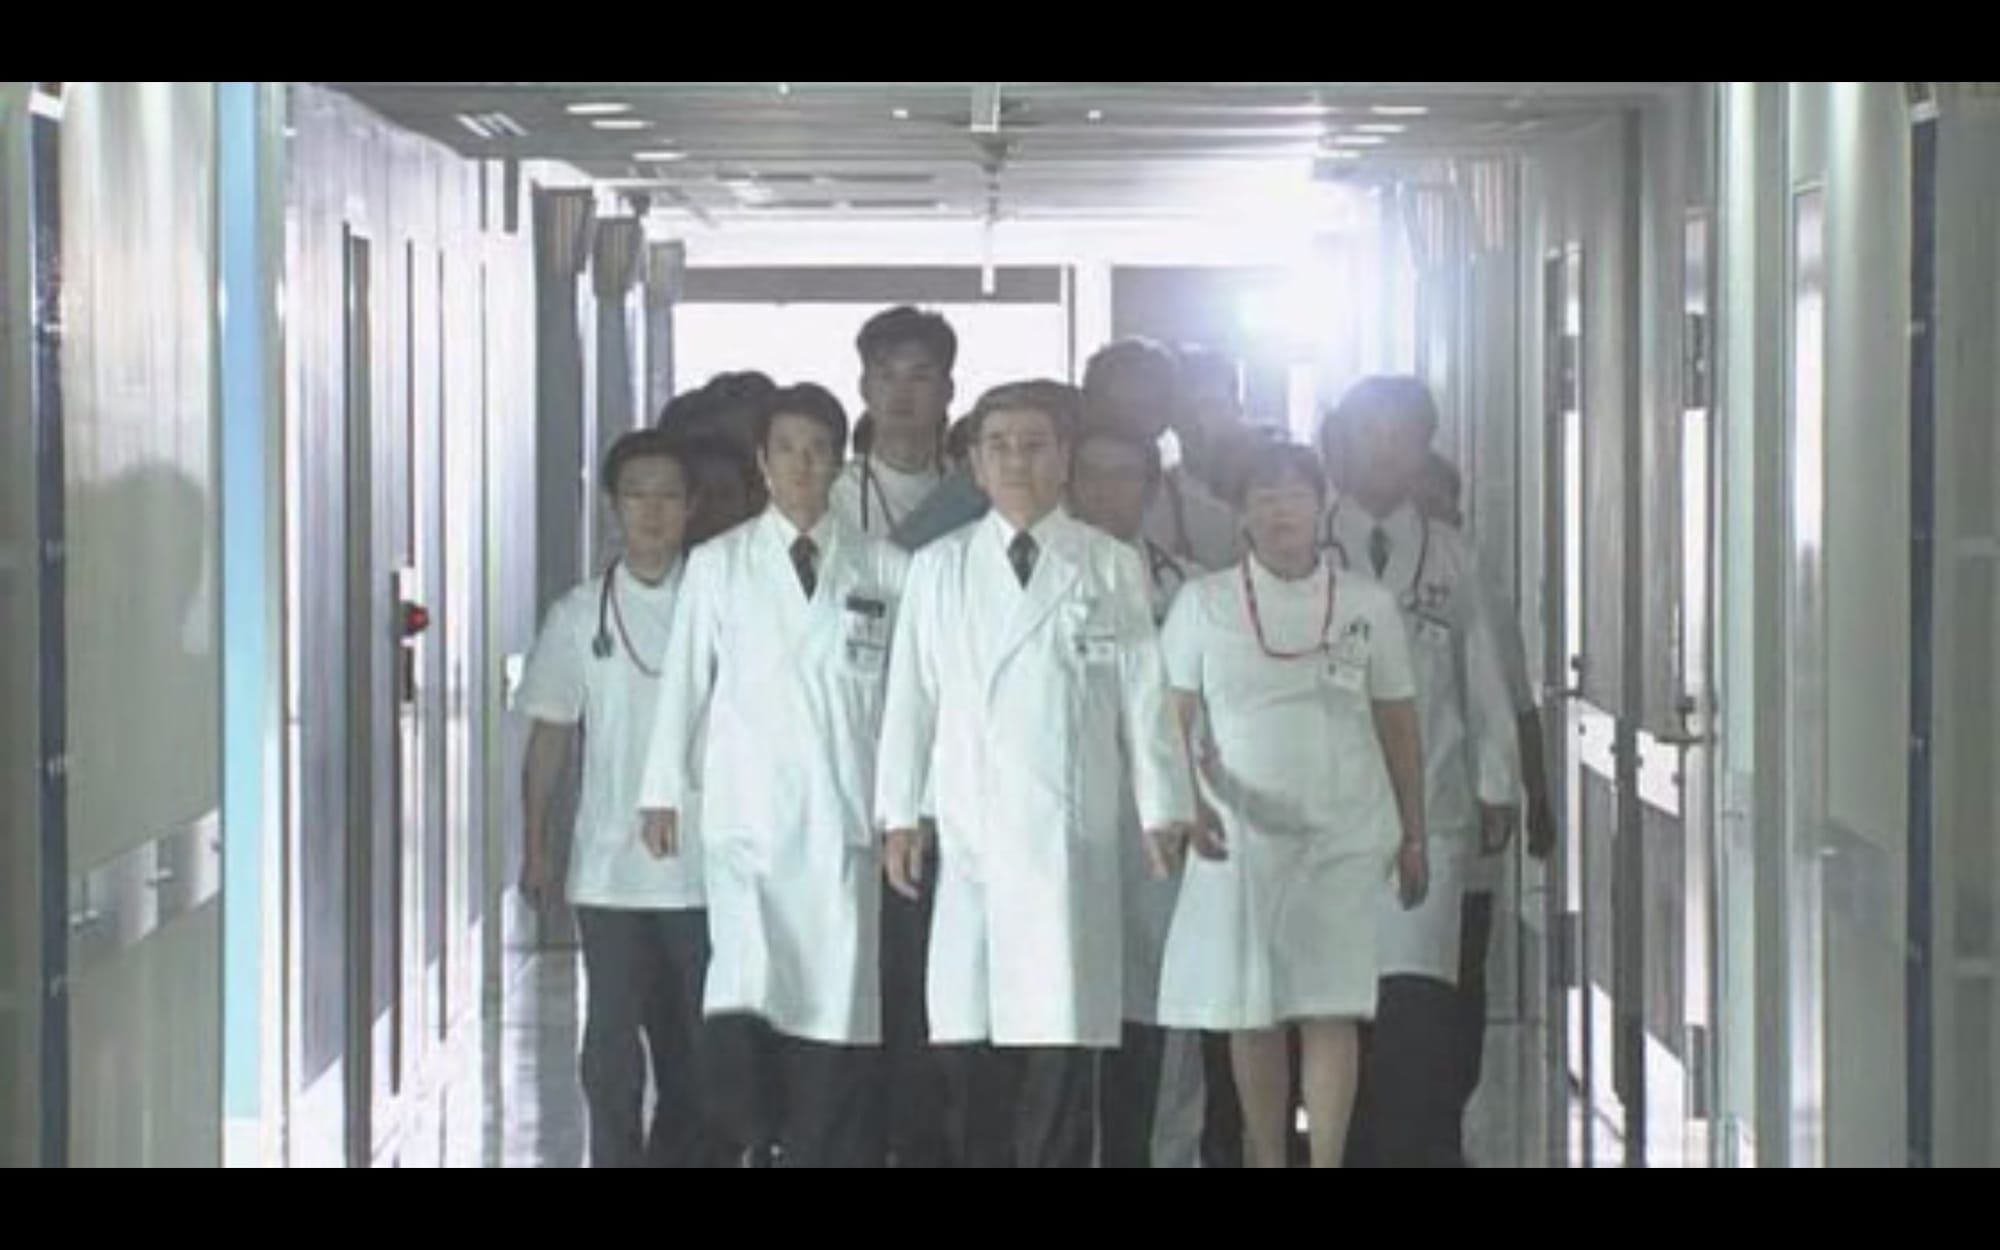 doctors walk en masse through hospital corridors